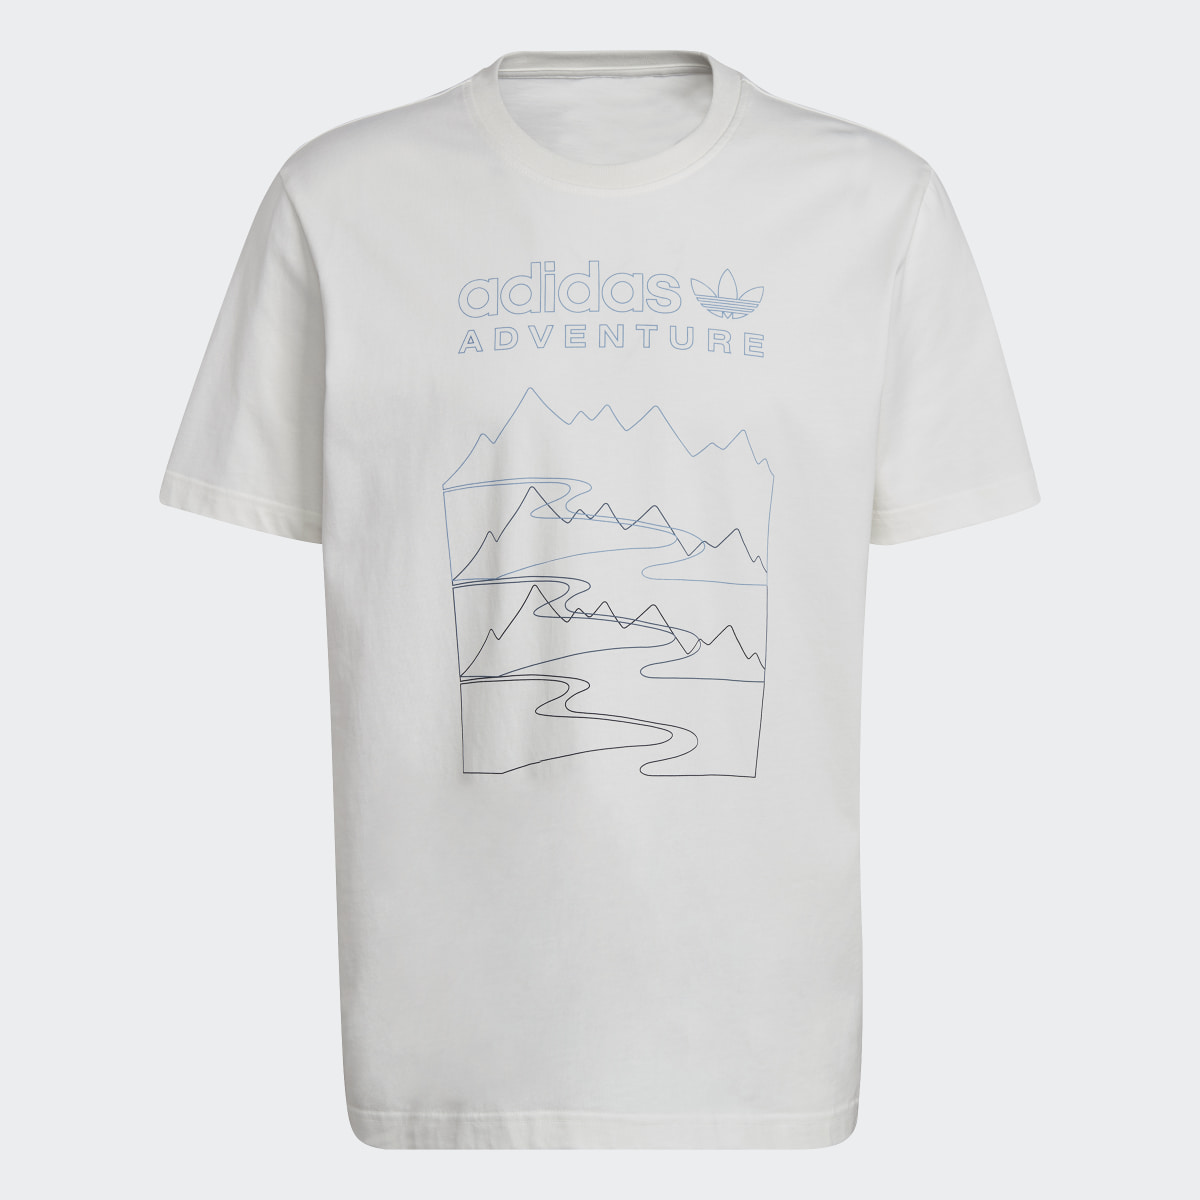 Adidas T-shirt adidas Adventure Mountain Front. 5